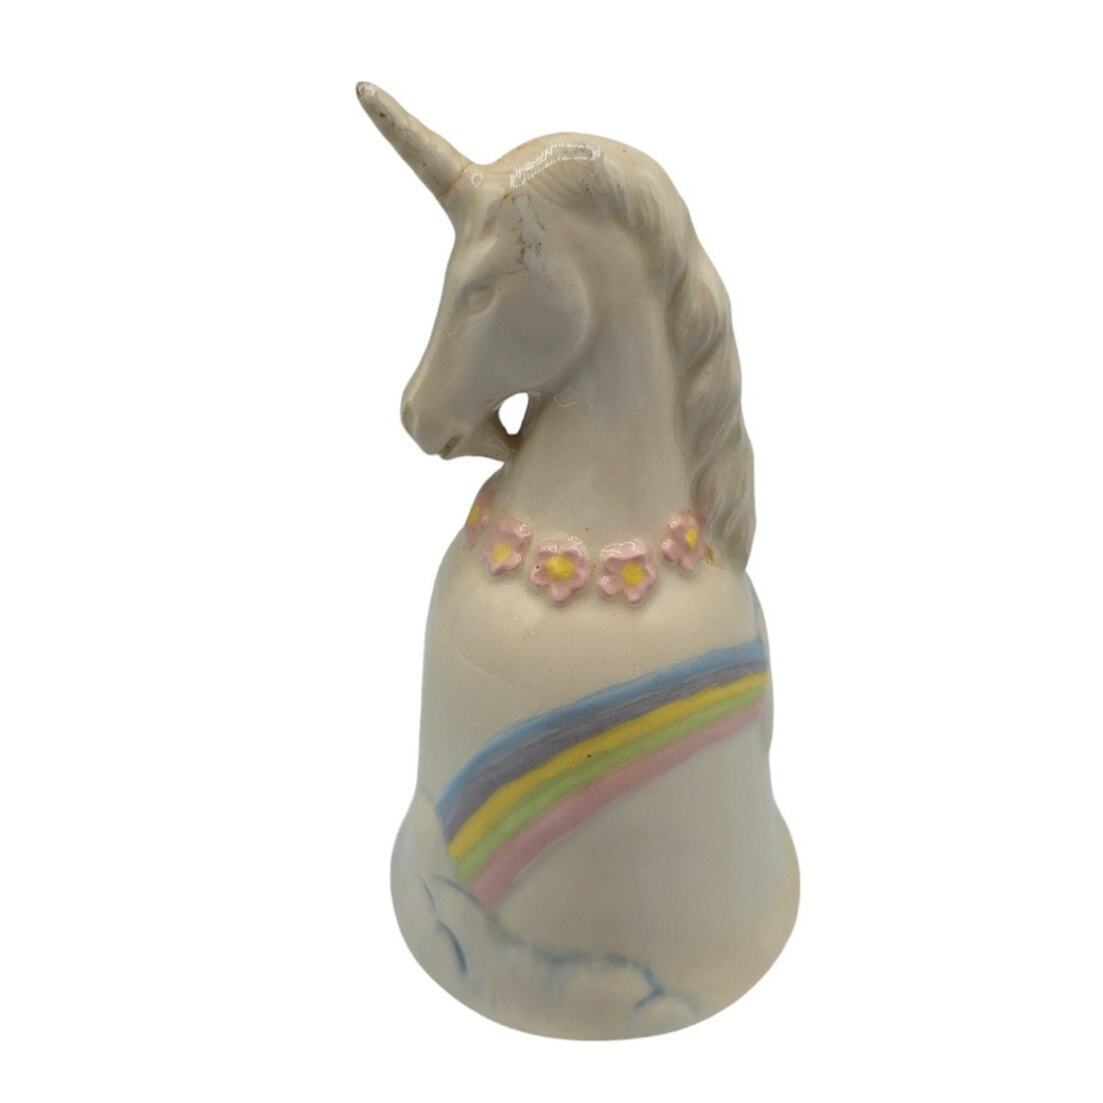 Vintage 1983 Enesco Porcelain Unicorn Bell with Flowers Rainbow & Cloud